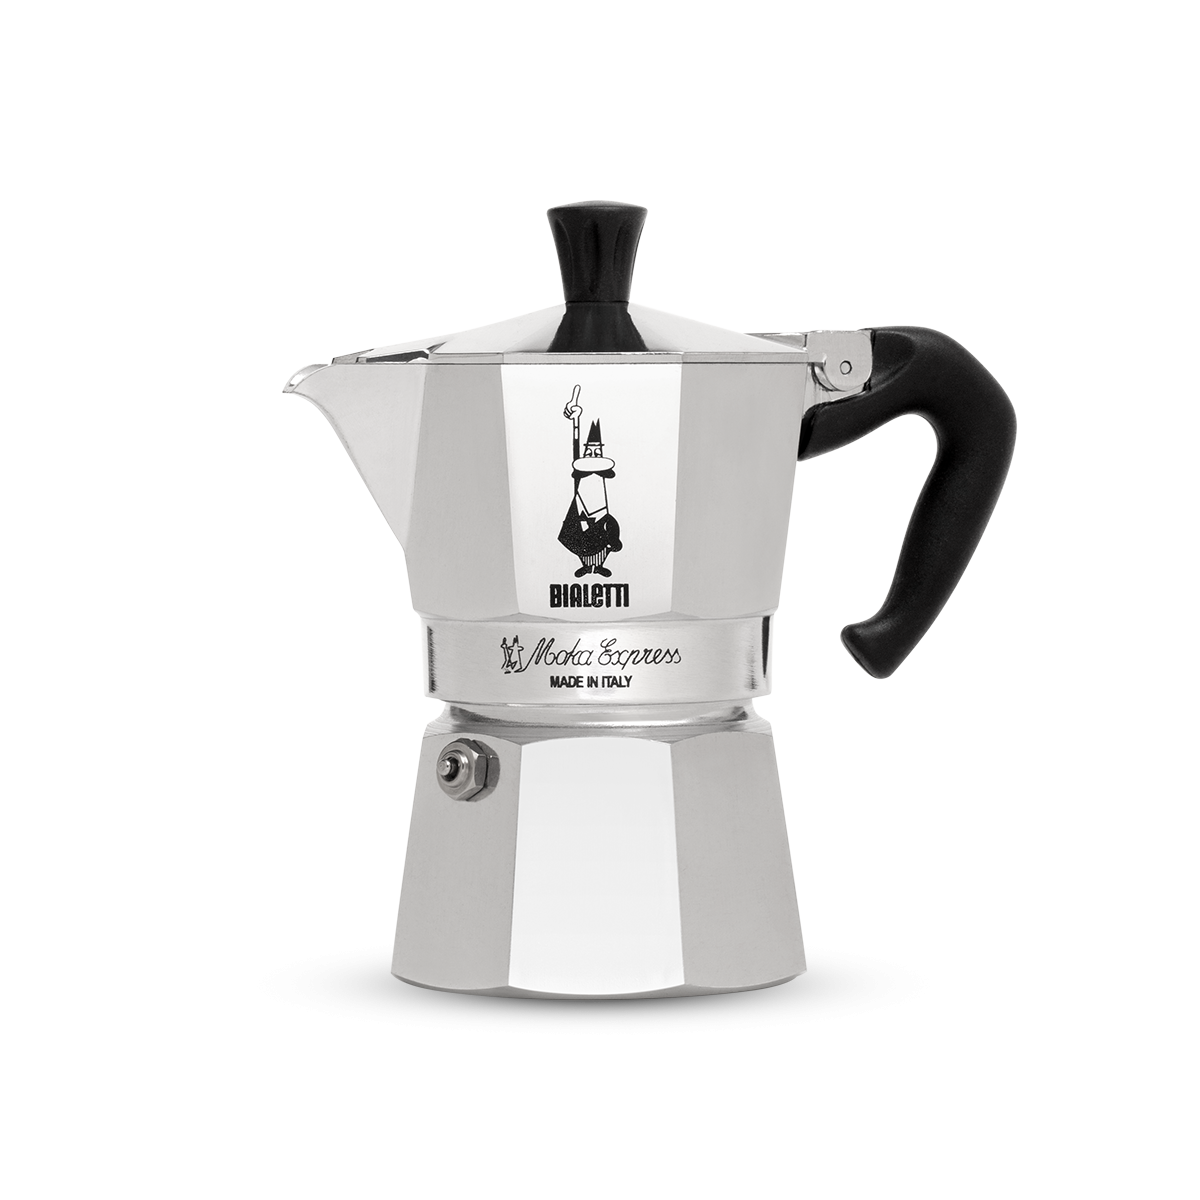 Bialetti Moka Express 4 Cup stove top coffee maker 1164